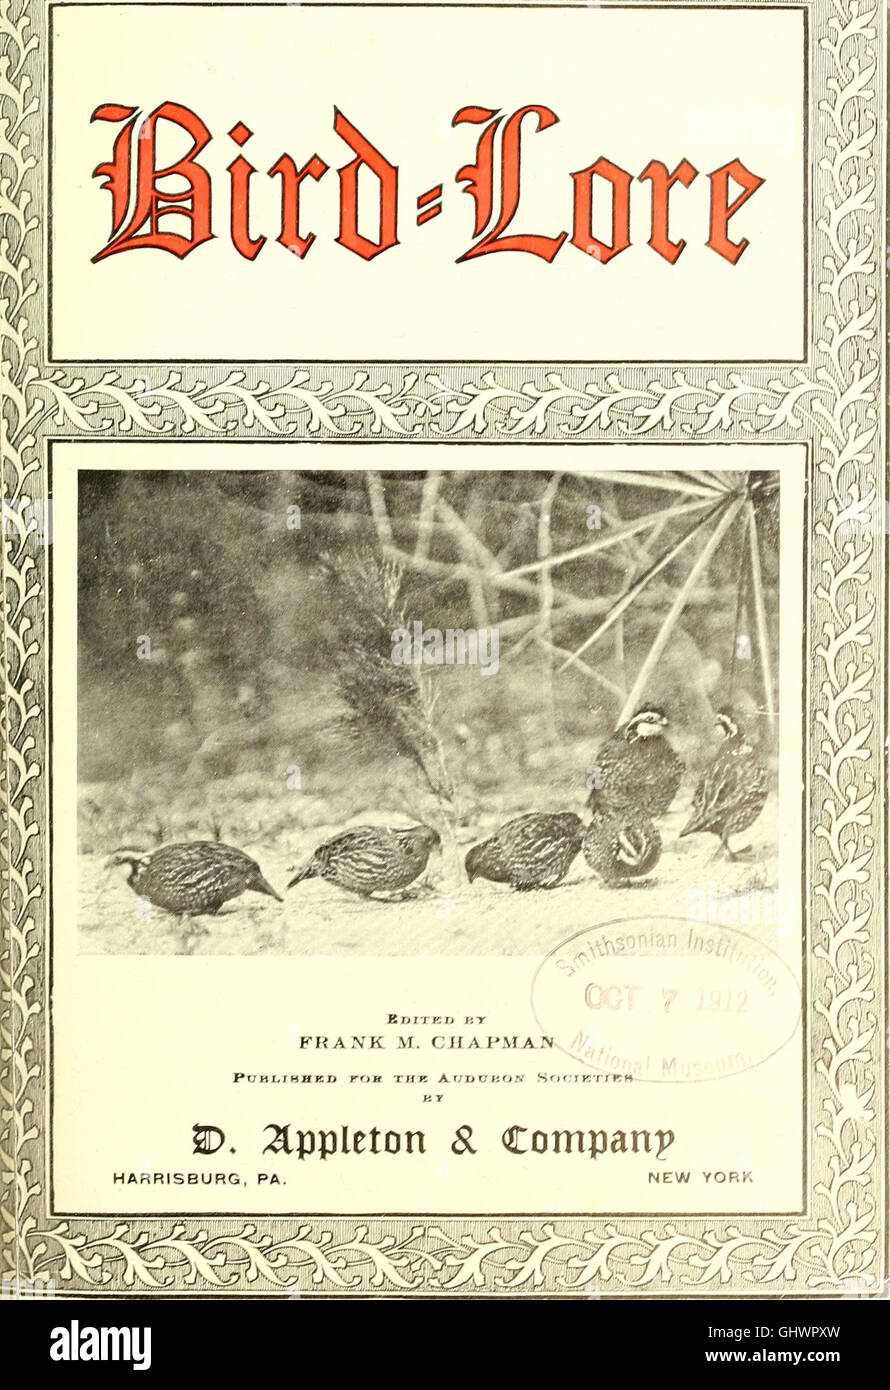 Bird lore (1912) Stock Photo